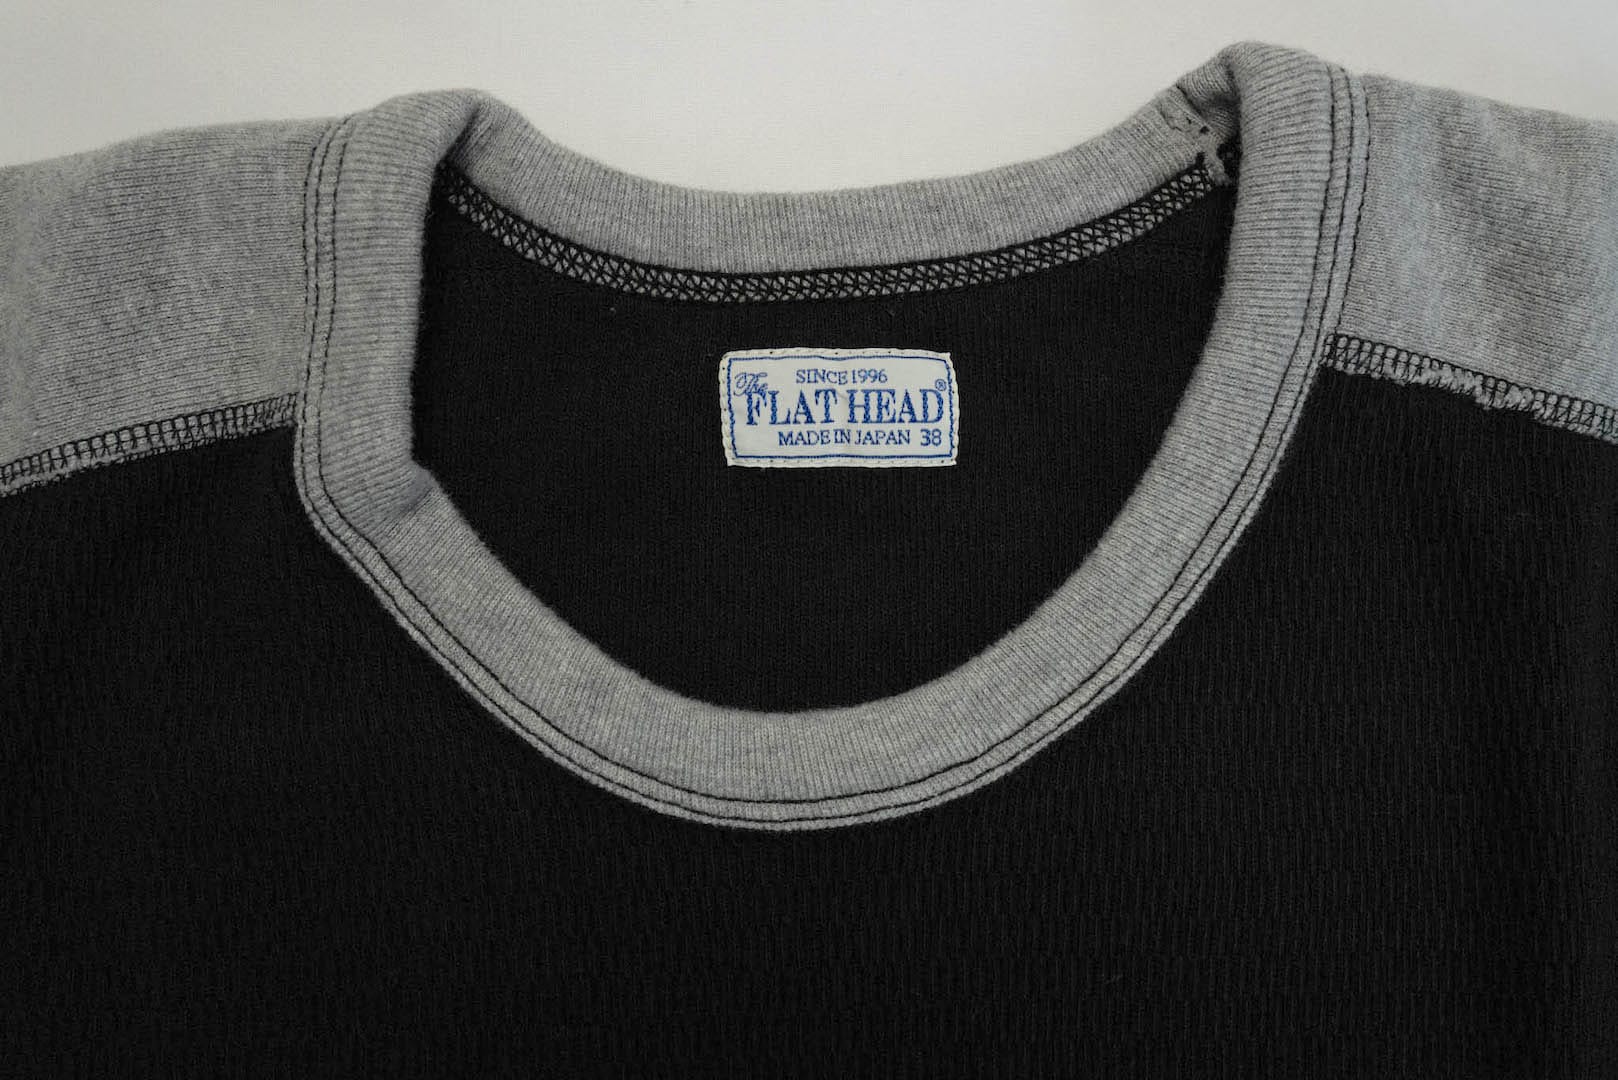 The Flat Head "Panneled" L/S Thermal Shirt (Black X Grey)